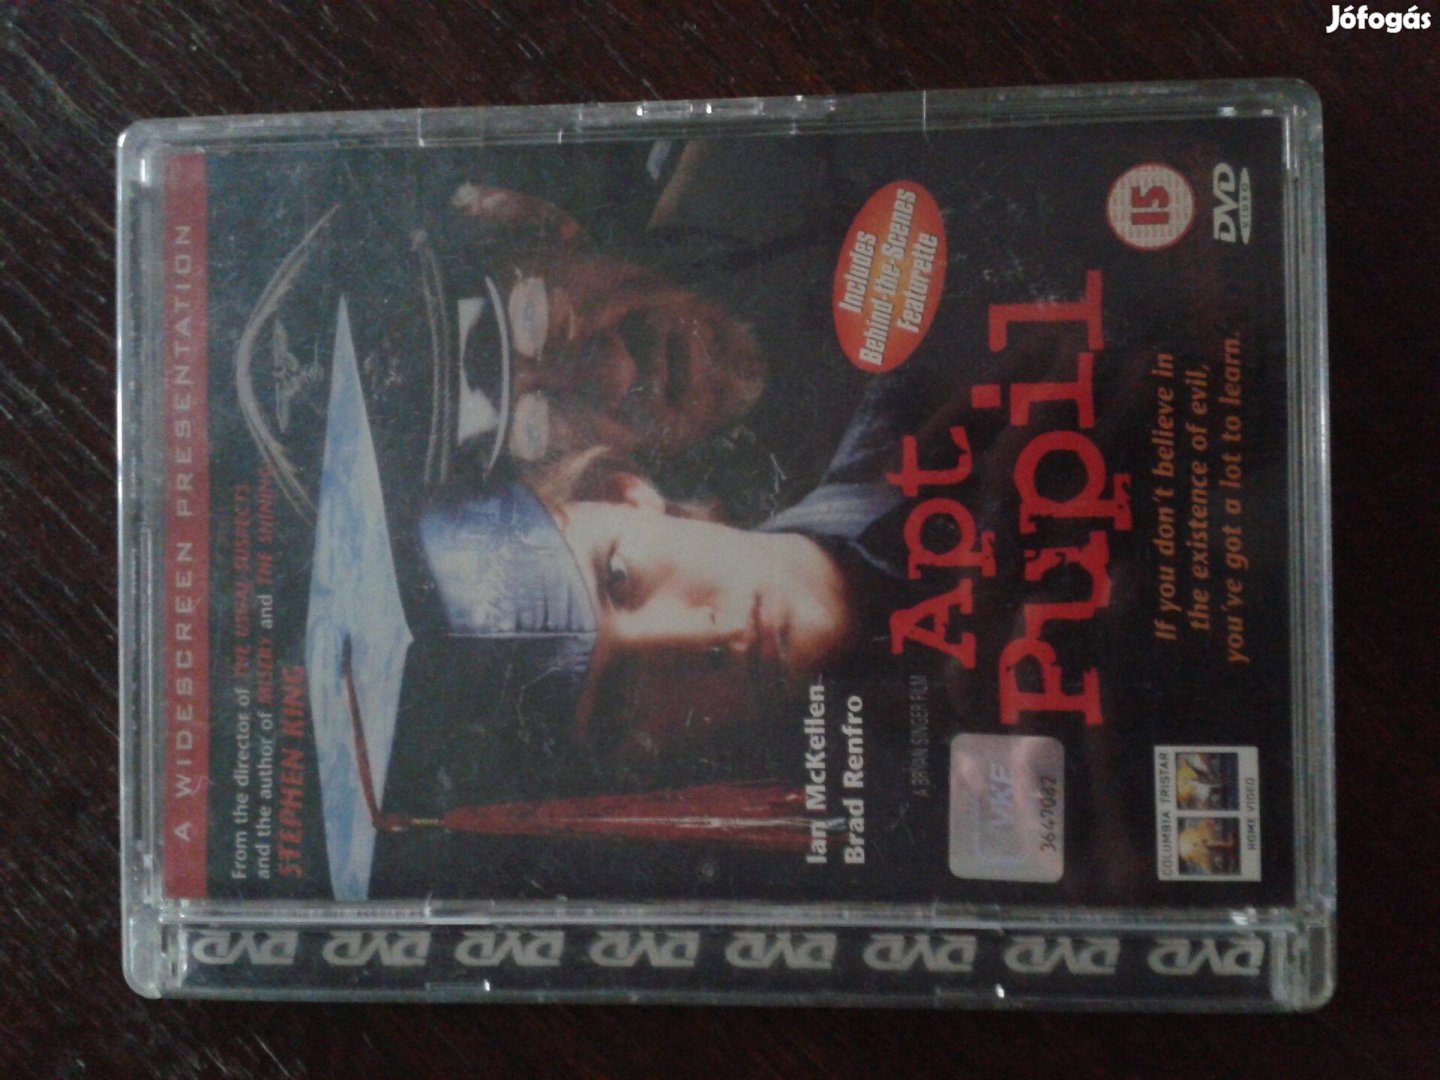 Apt pupil DVD